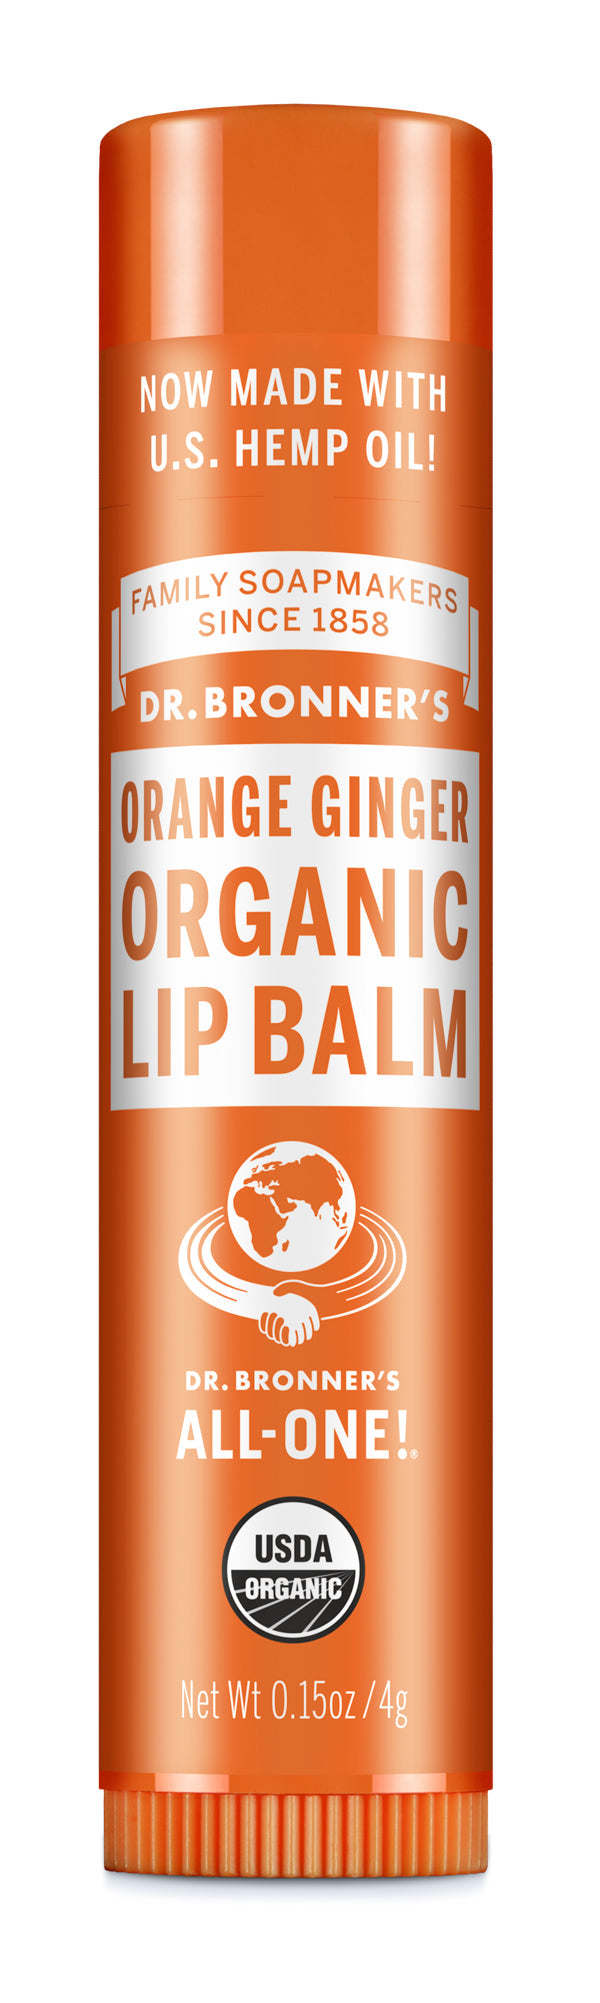 Orange Ginger - Organic Lip Balms - by Dr Bronner's |ProCare Outlet|